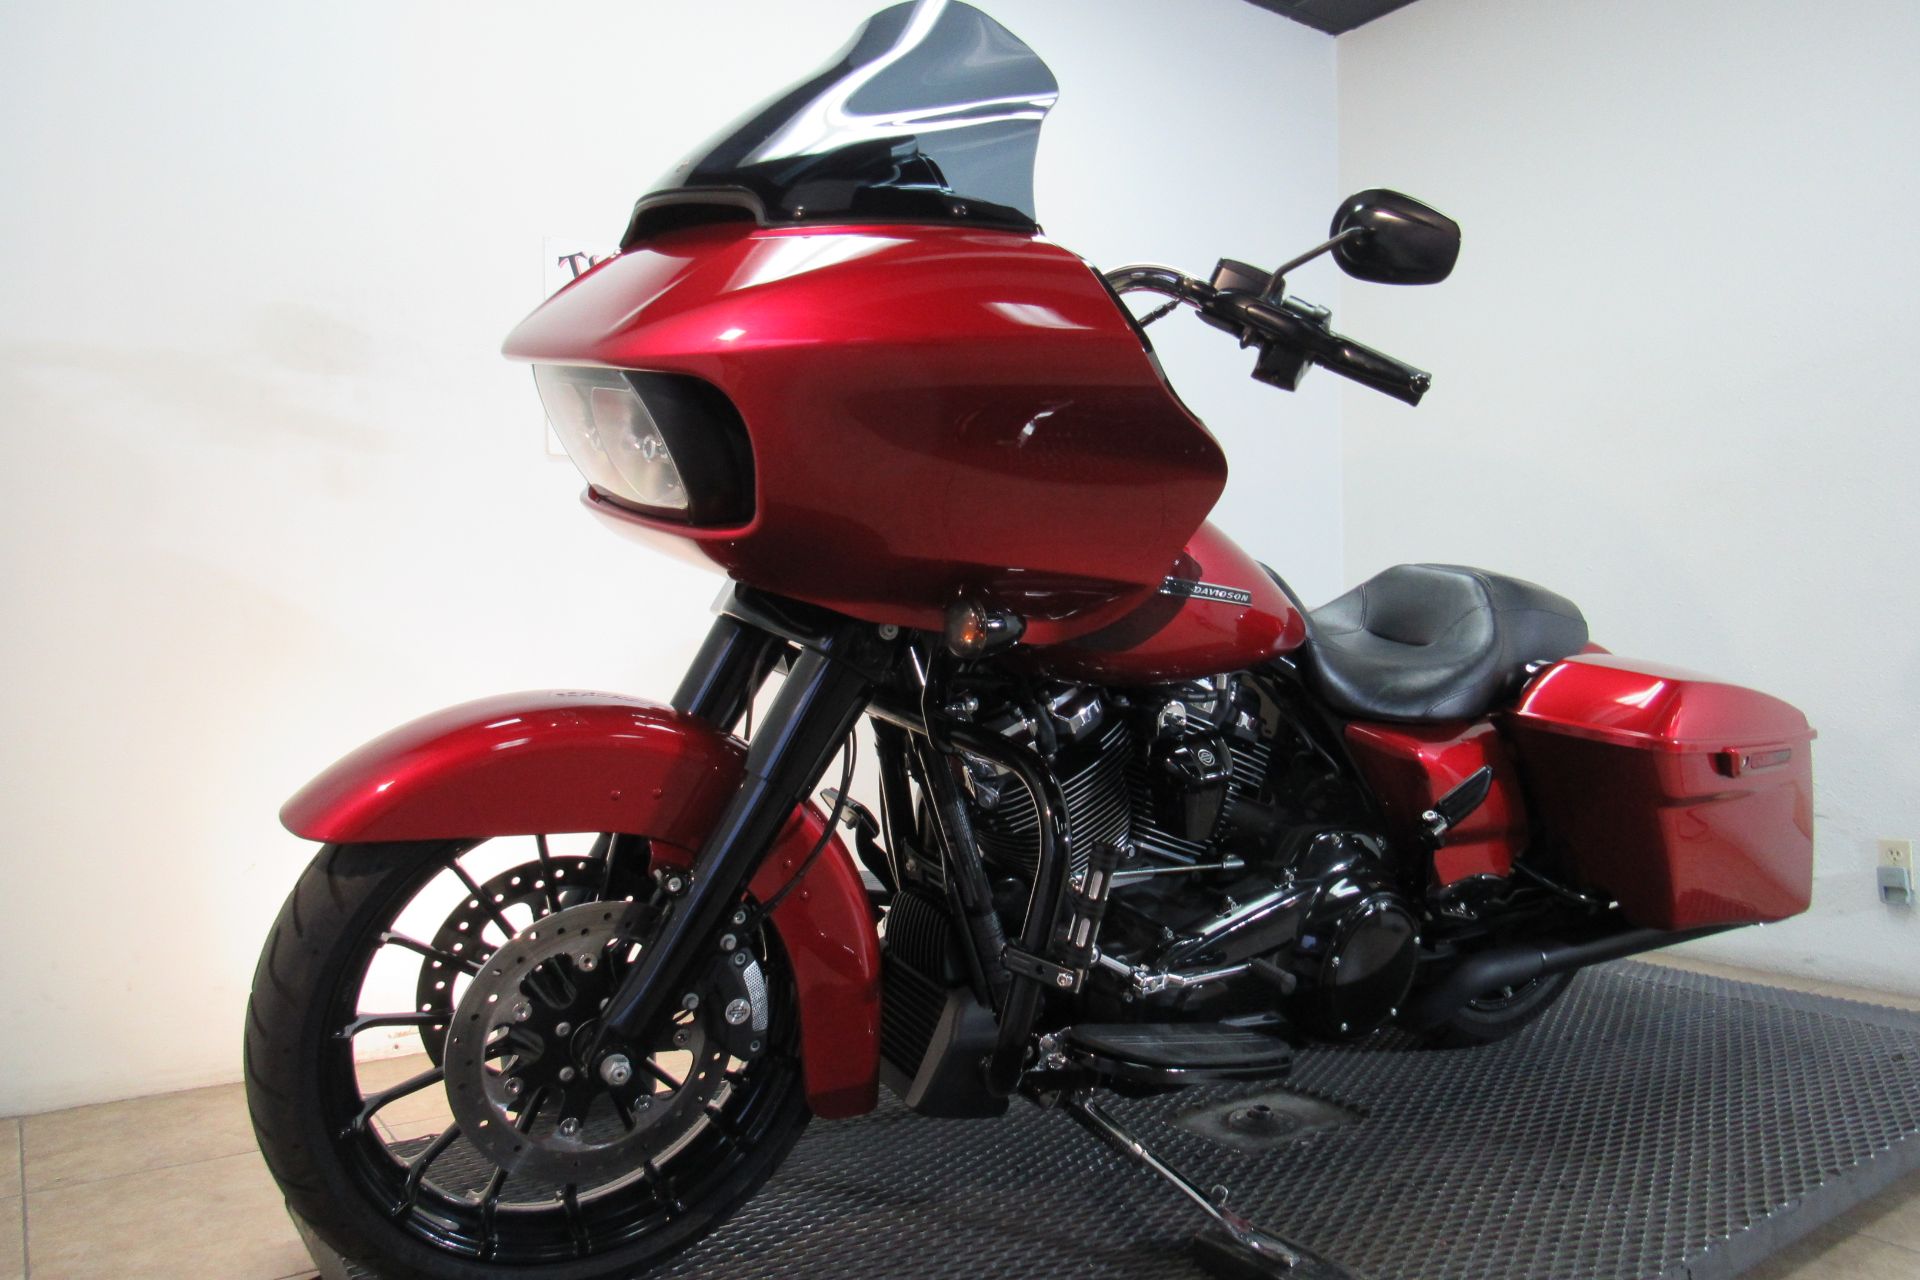 2018 Harley-Davidson Road Glide® Special in Temecula, California - Photo 36